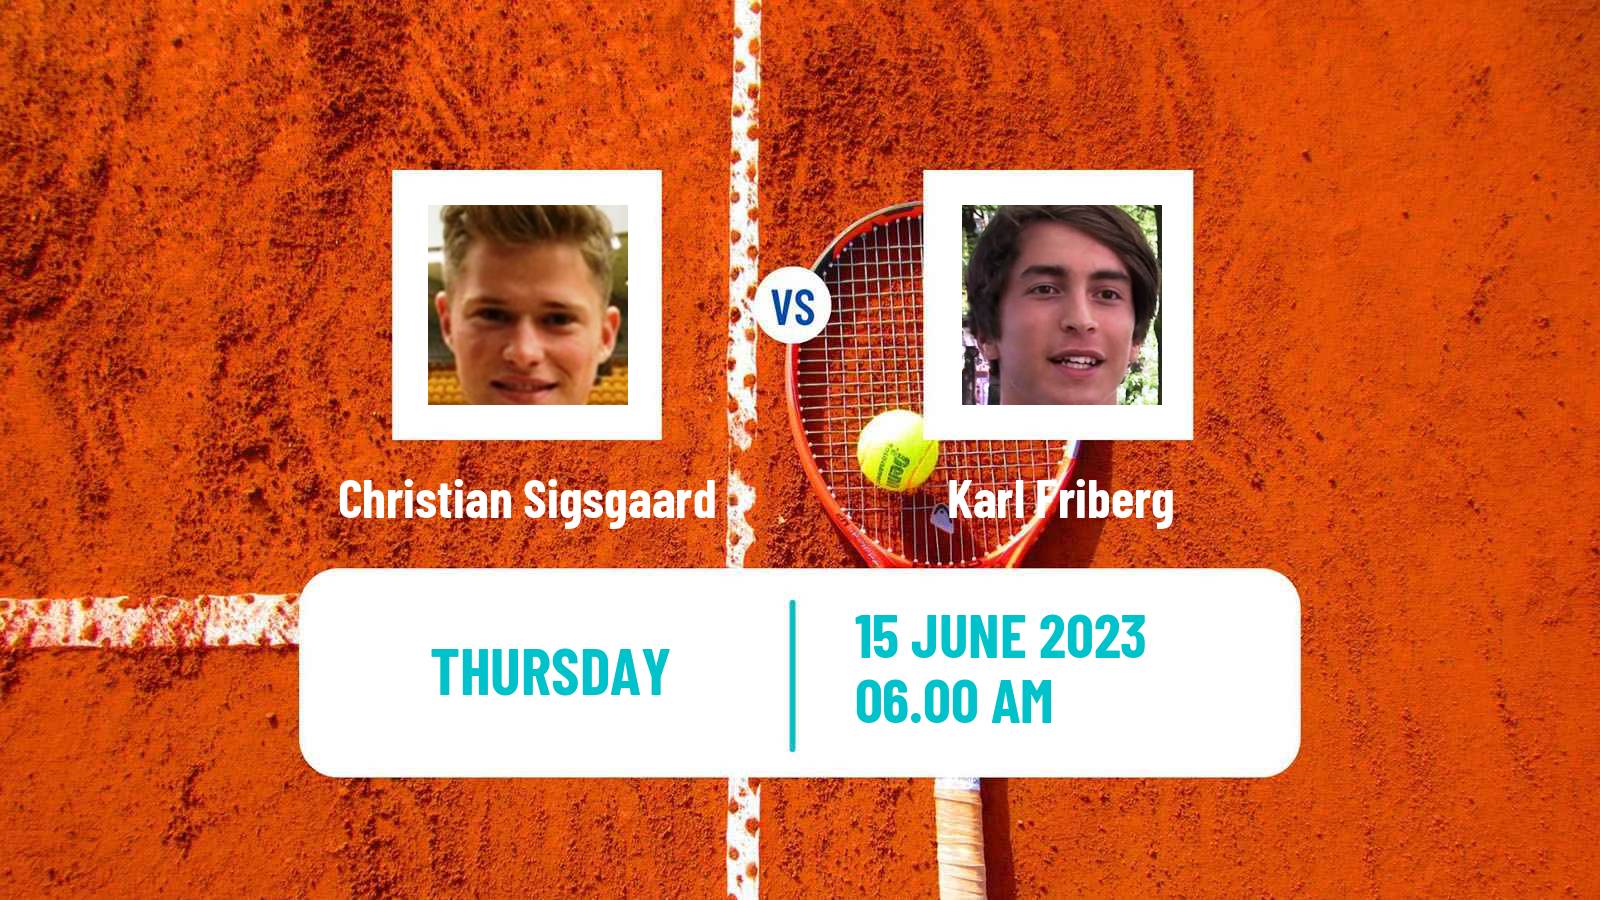 Tennis ITF M25 Risskov Aarhus Men Christian Sigsgaard - Karl Friberg